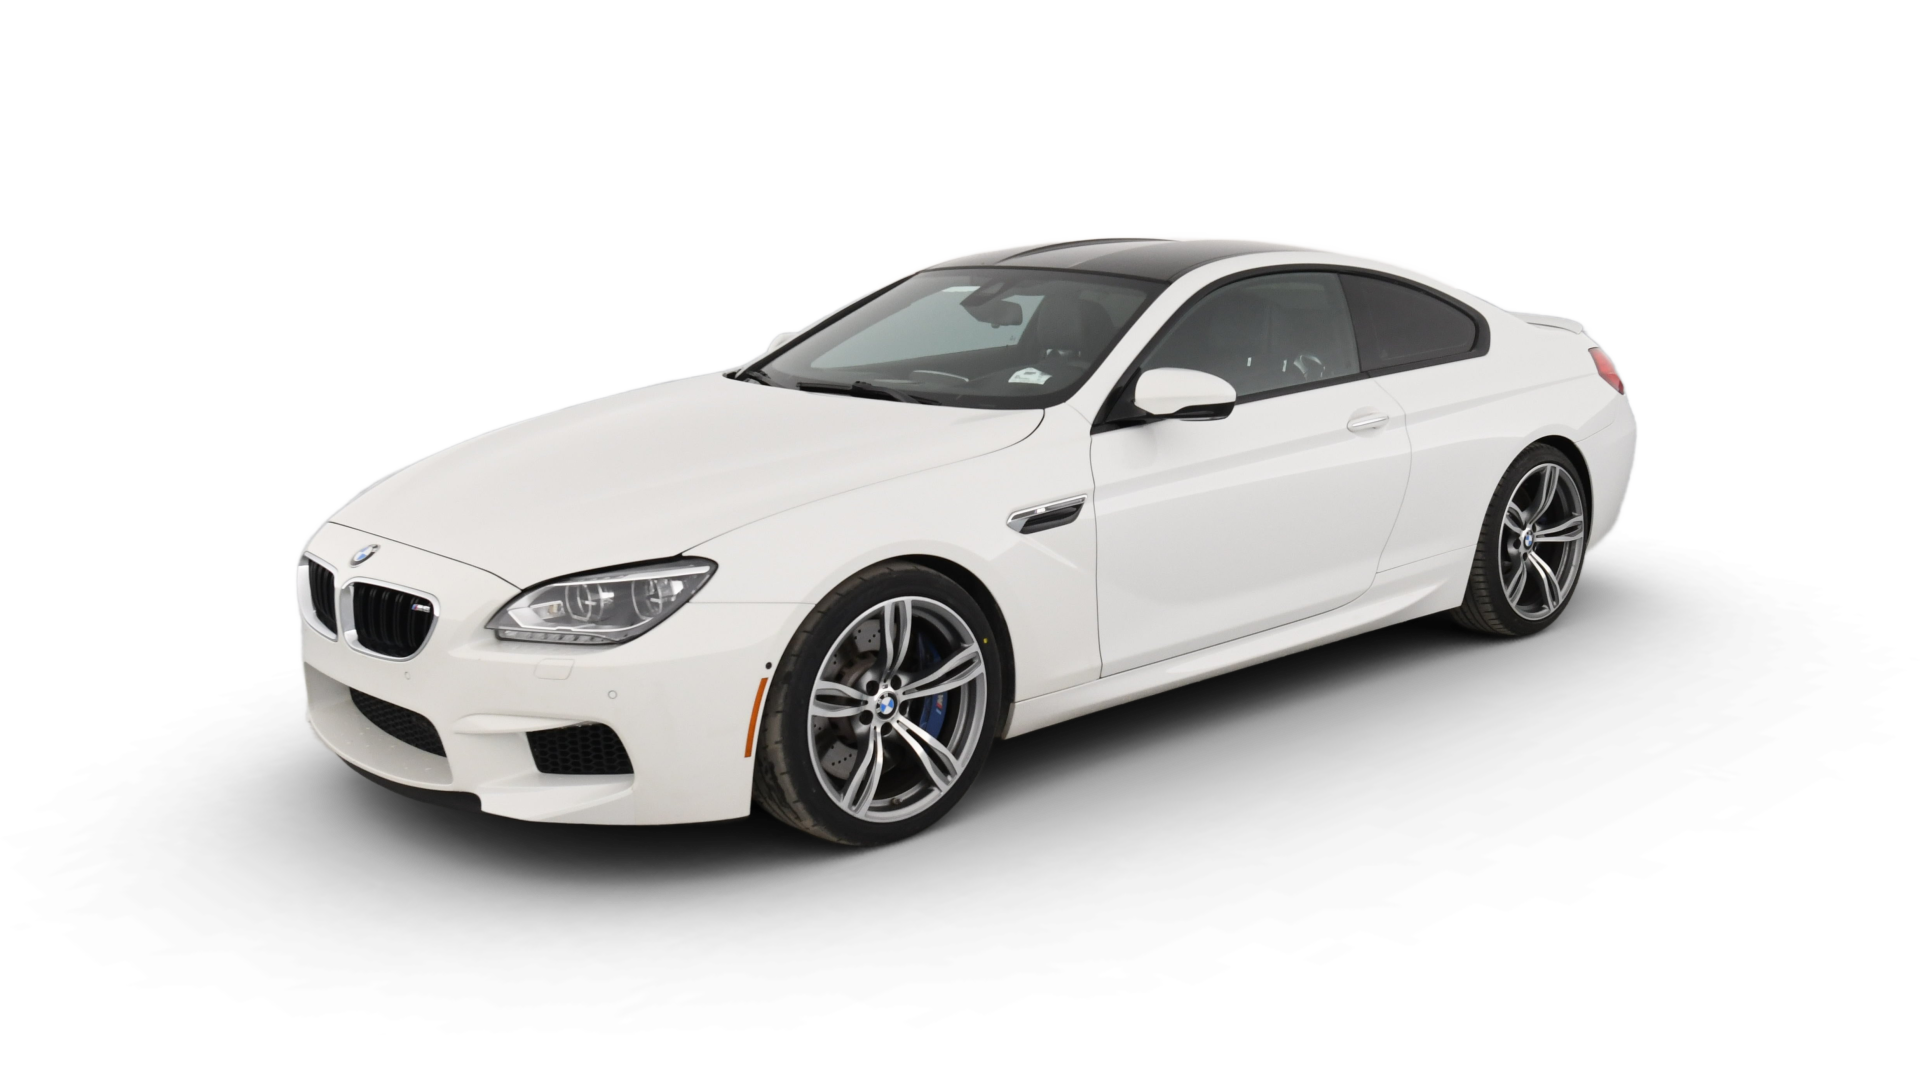 BMW M6 model image.